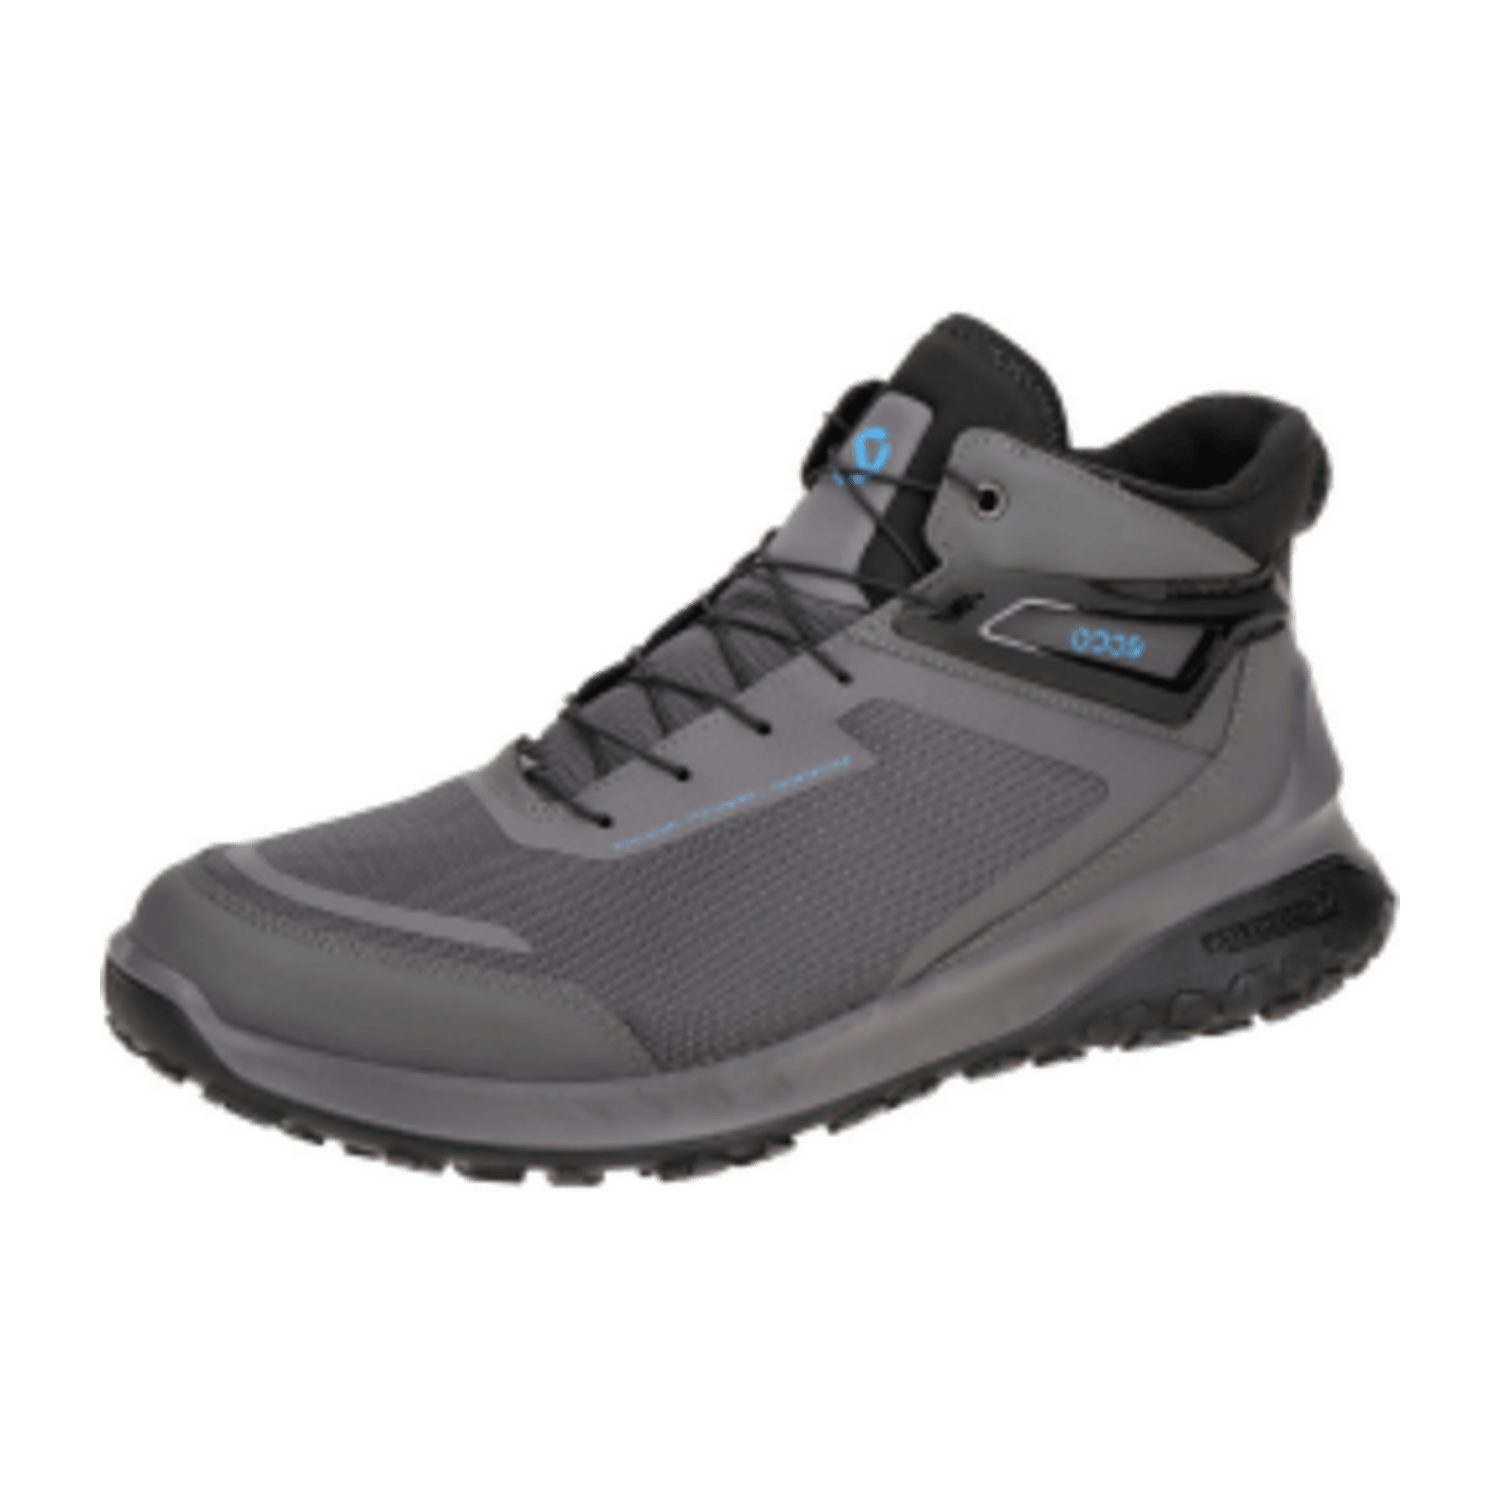 Ecco Ult-Trn Schuhe grau Waterproof 824294